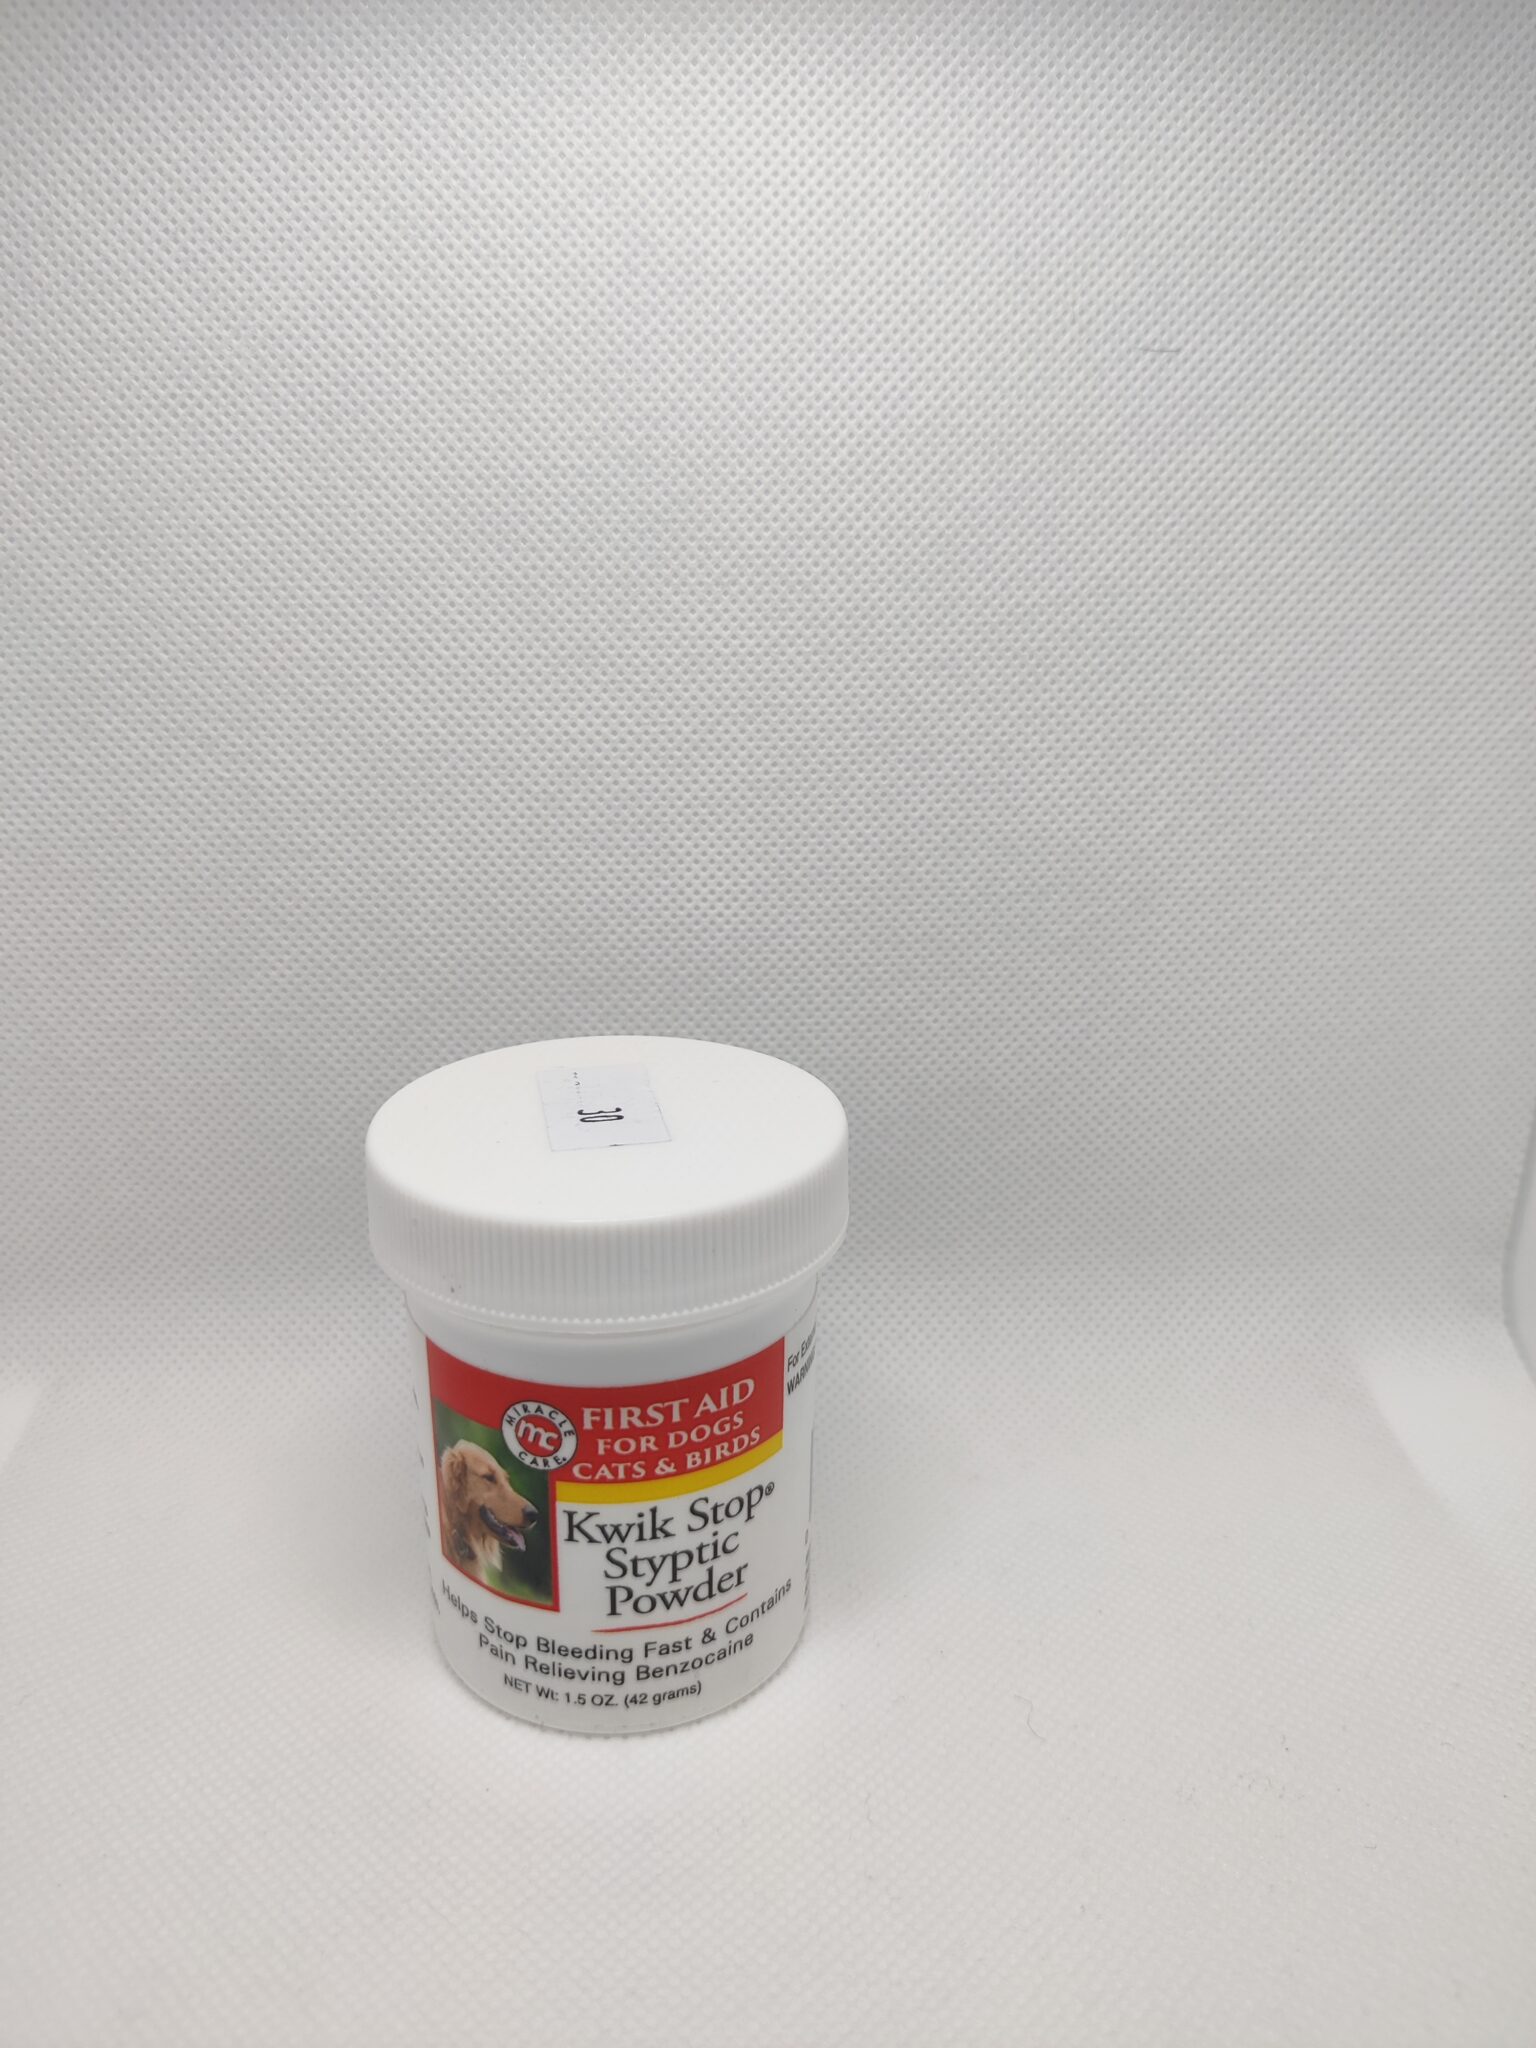 Kwik Stop Styptic Powder with Benzocaine 42